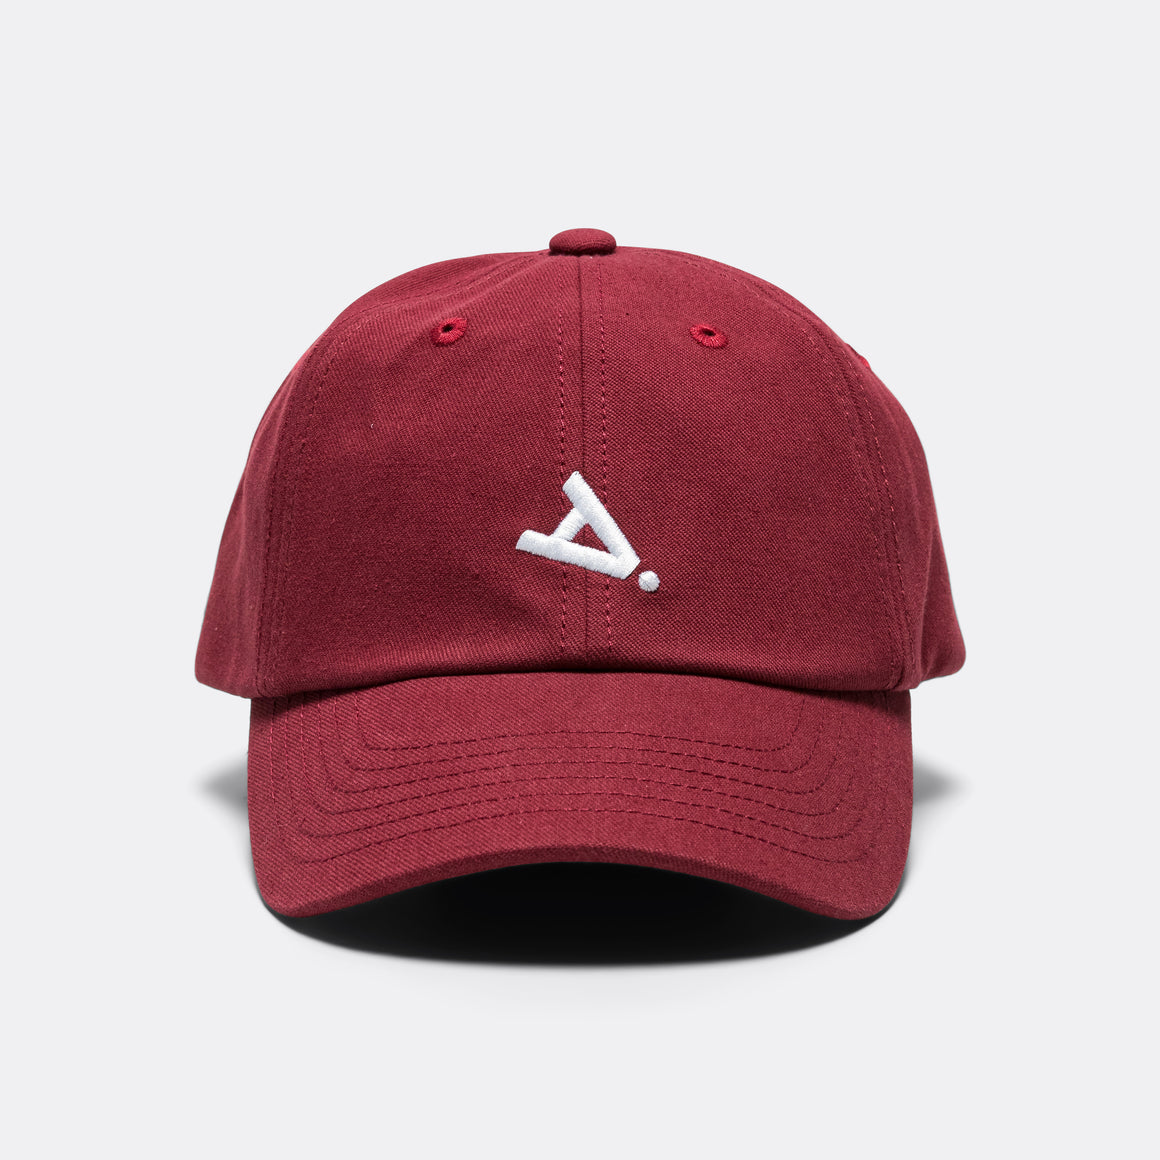 Formula-A Baseball Cap - Rose Red